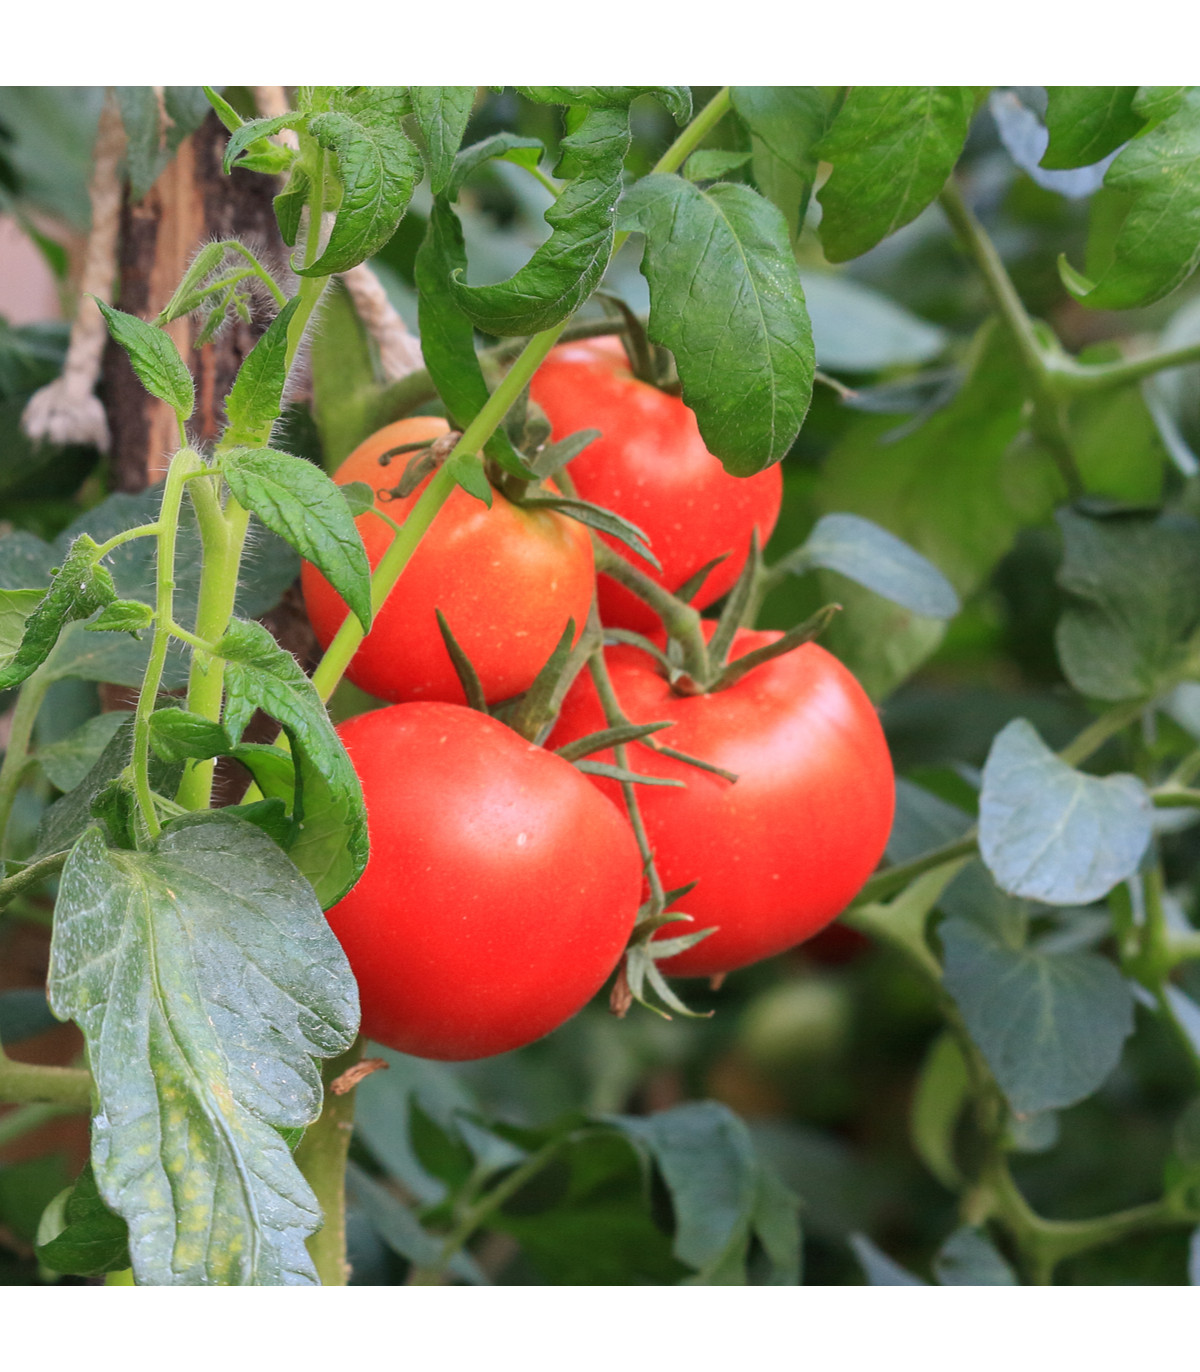 Rajče Karkulka - Solanum lycopersicum - osivo rajčat - 20 ks